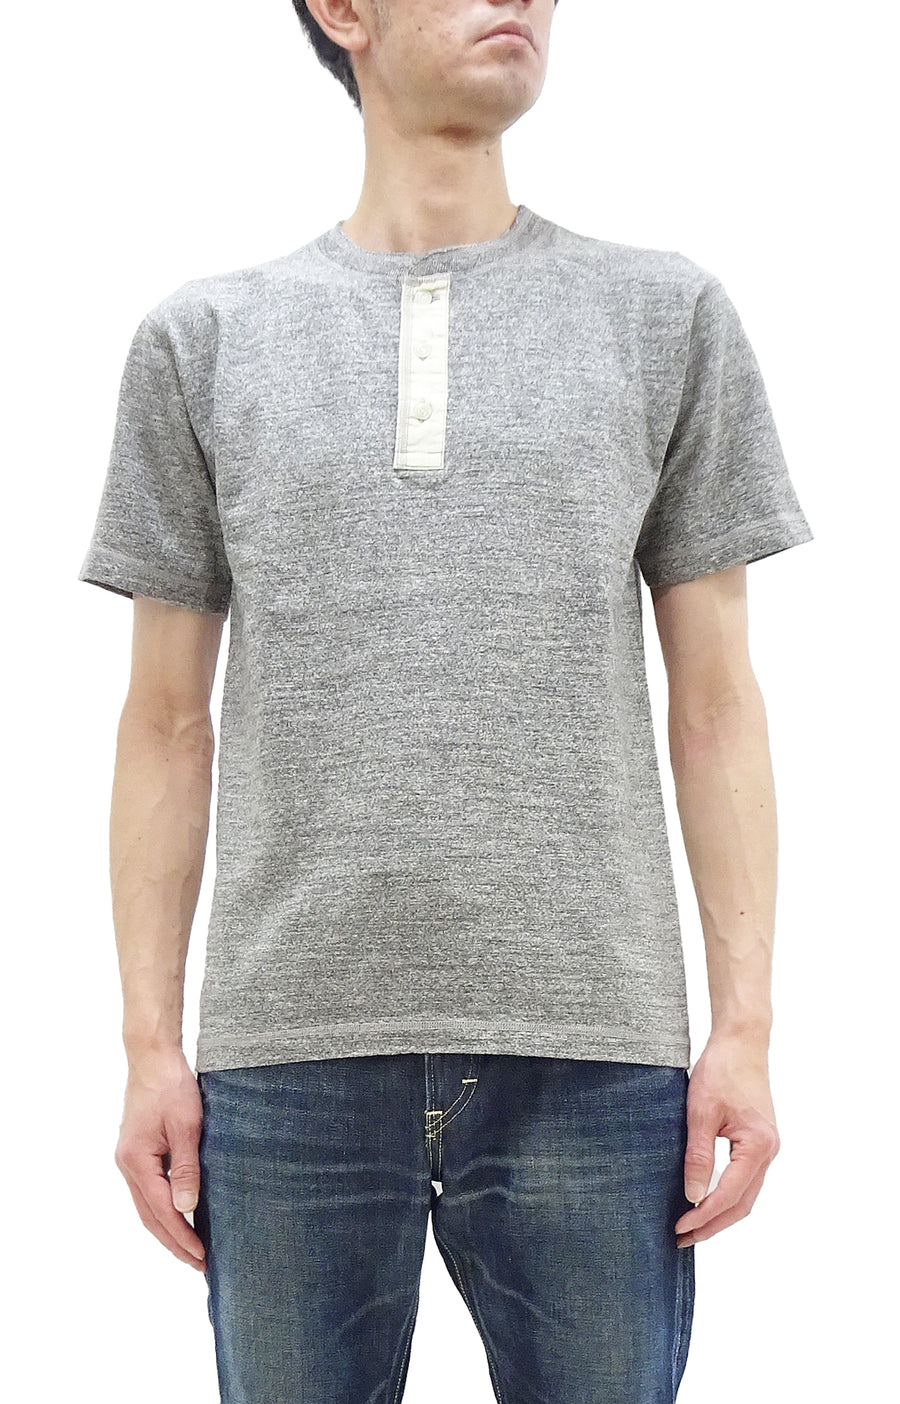 Buzz Rickson Henley T-Shirt Men's Short Sleeve Plain Loopwheeled 